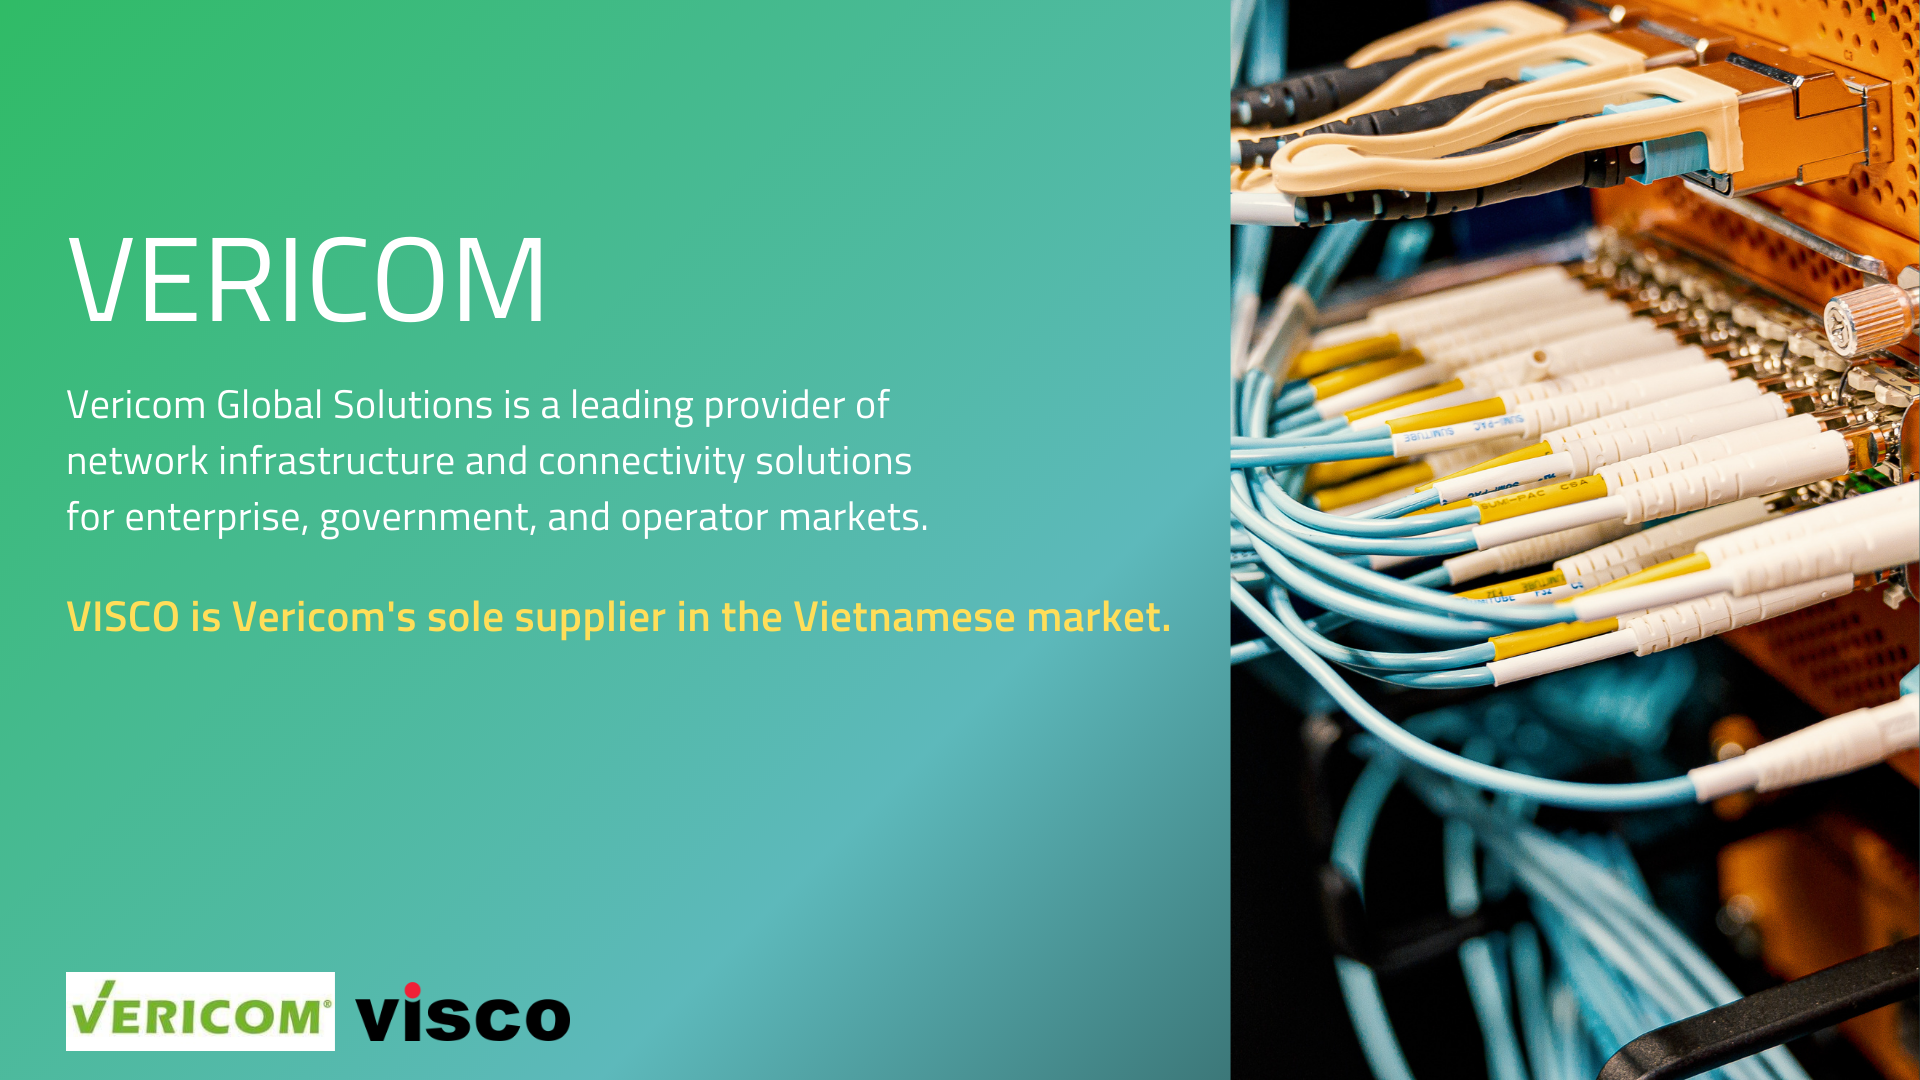 VERICOM - VISCO is Vericom's sole distributor in Vietnam and Myanmar market.